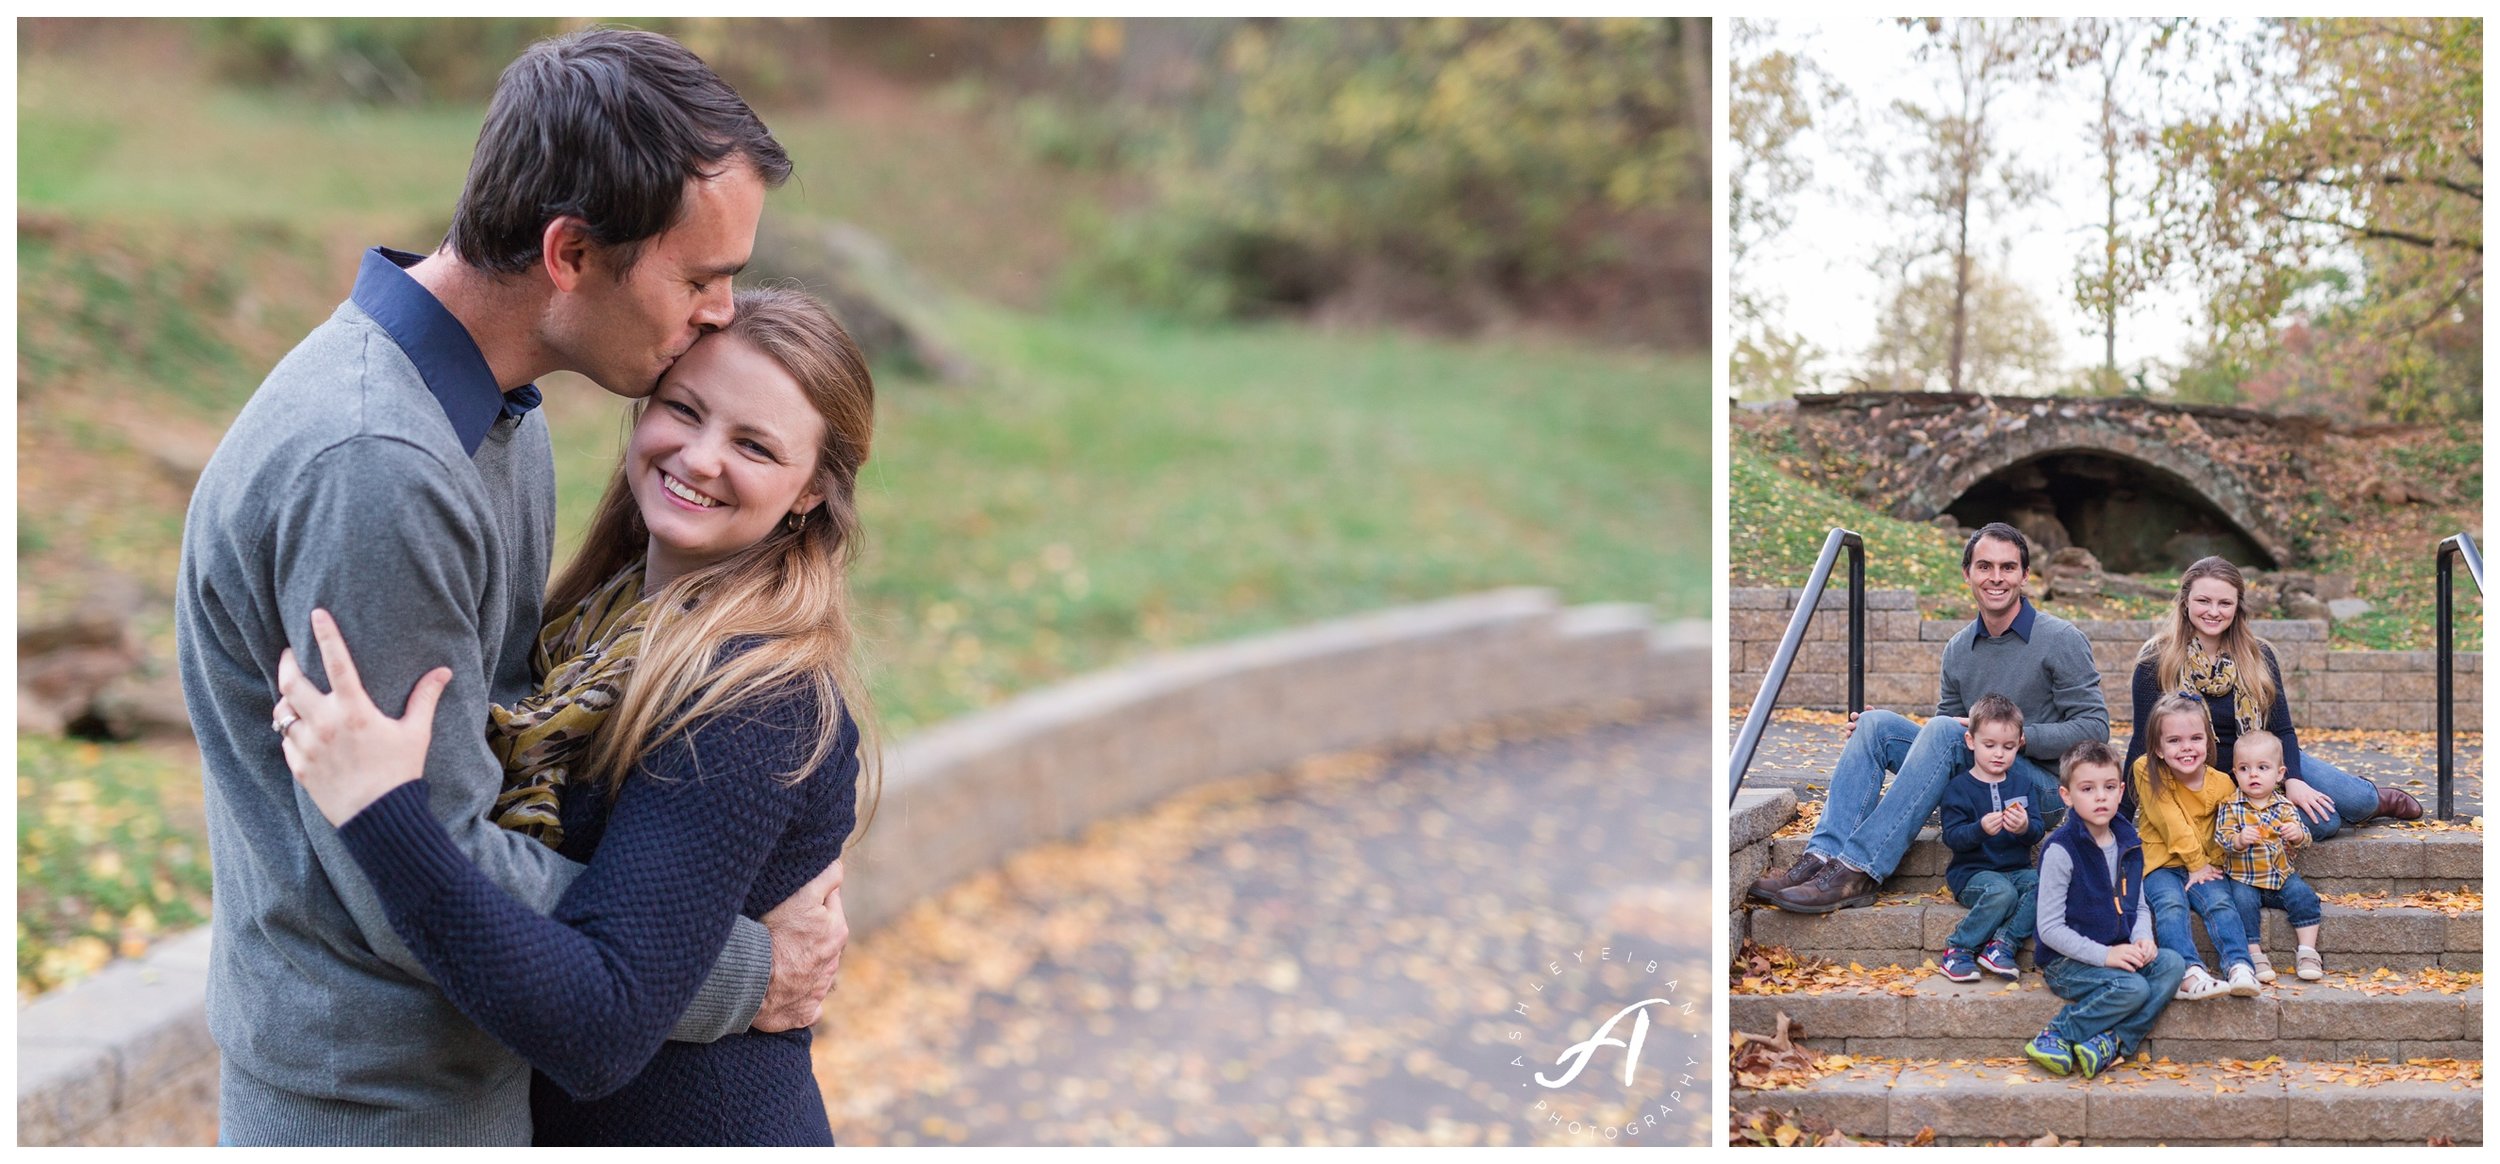 Lynchburg and Charlottesville Wedding Photographer || Fall family photos in Central Virginia || www.ashleyeiban.com